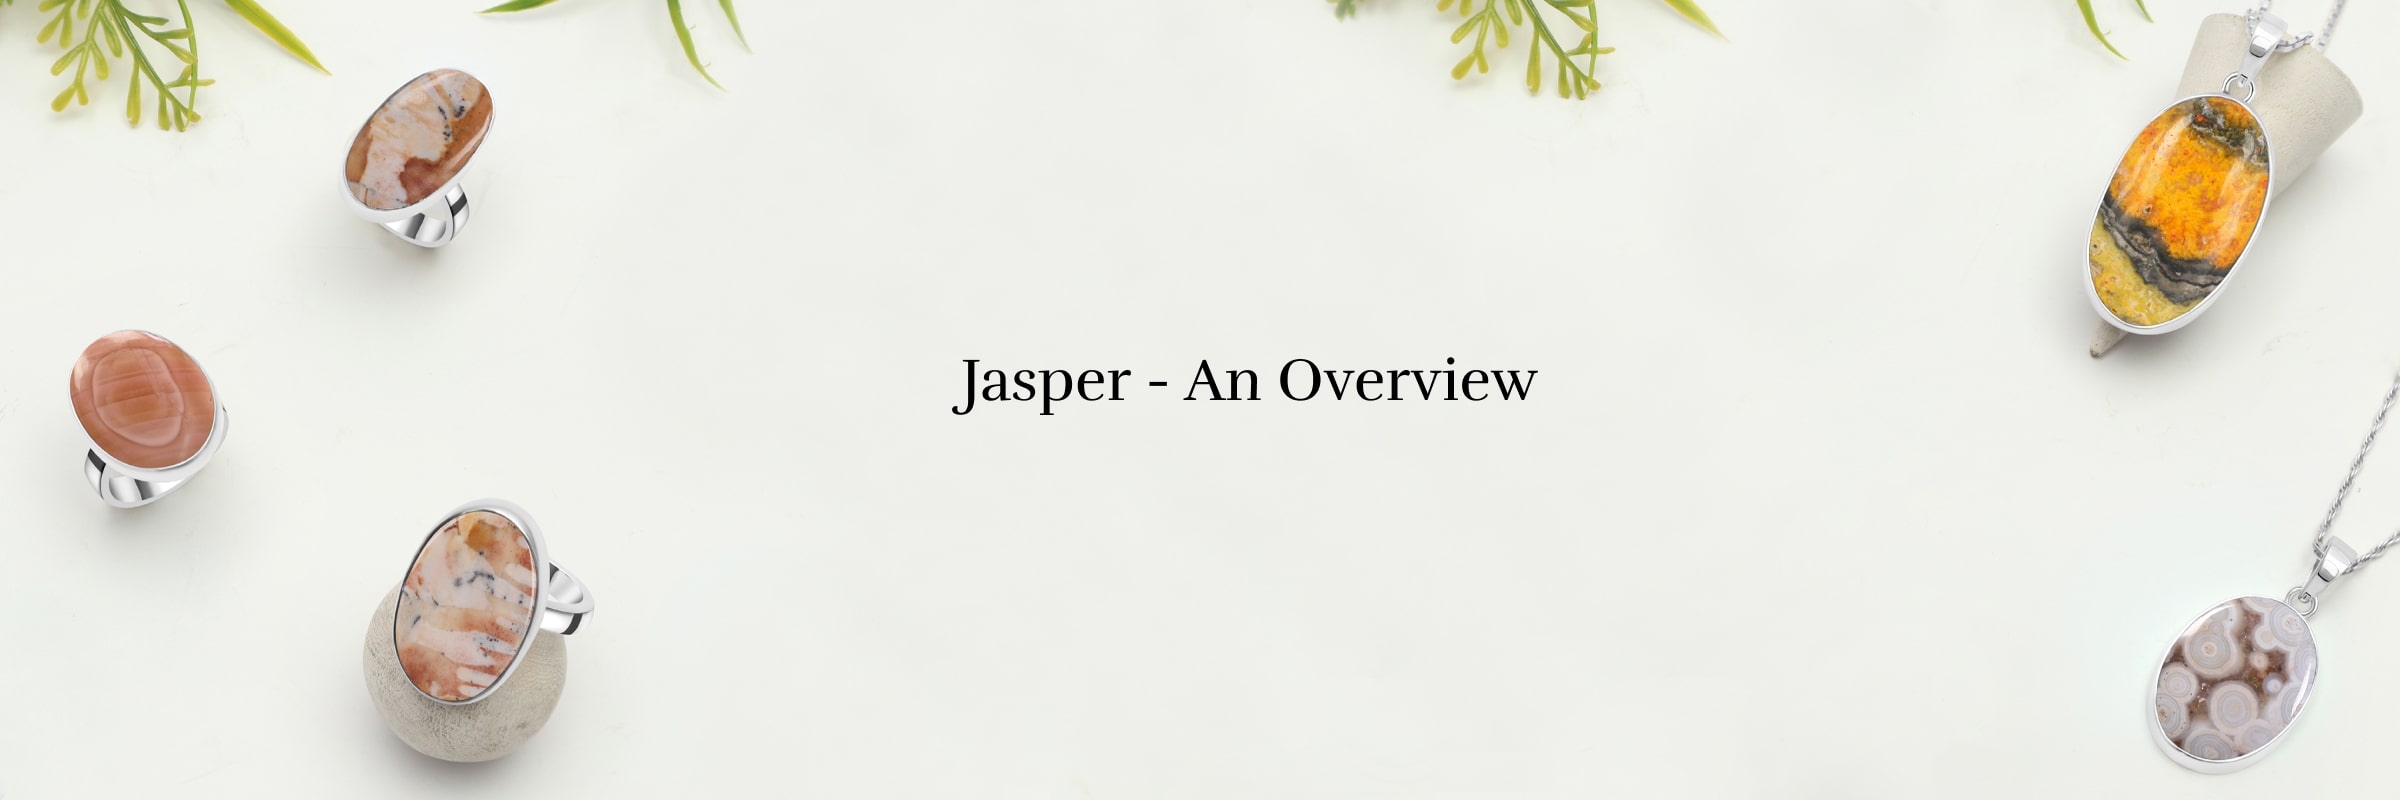 What is Jasper